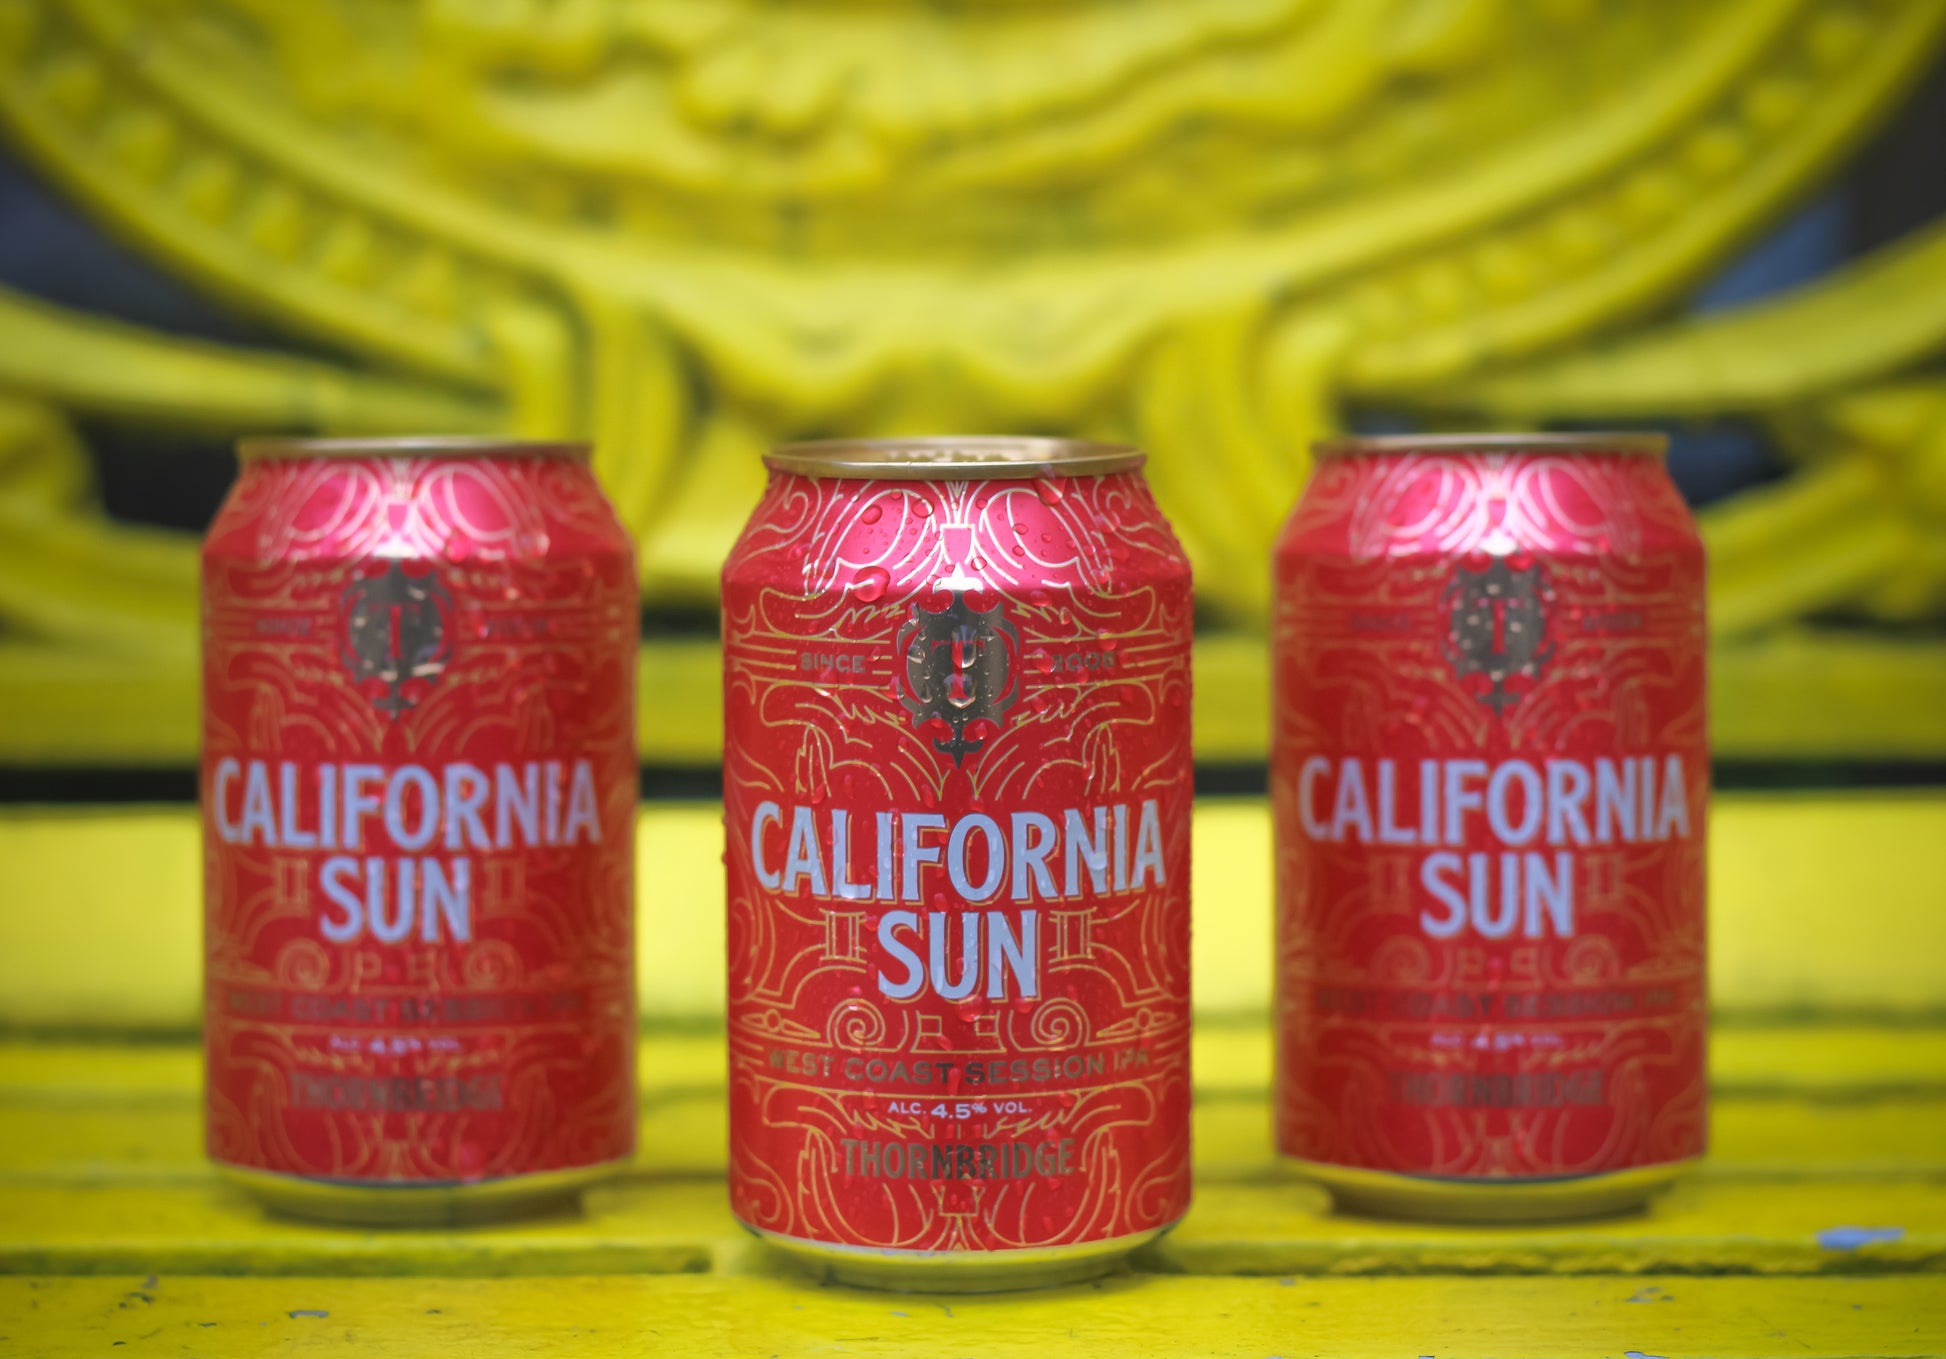 California Sun, 4.5% West Coast Session IPA Beer - Single Can Thornbridge